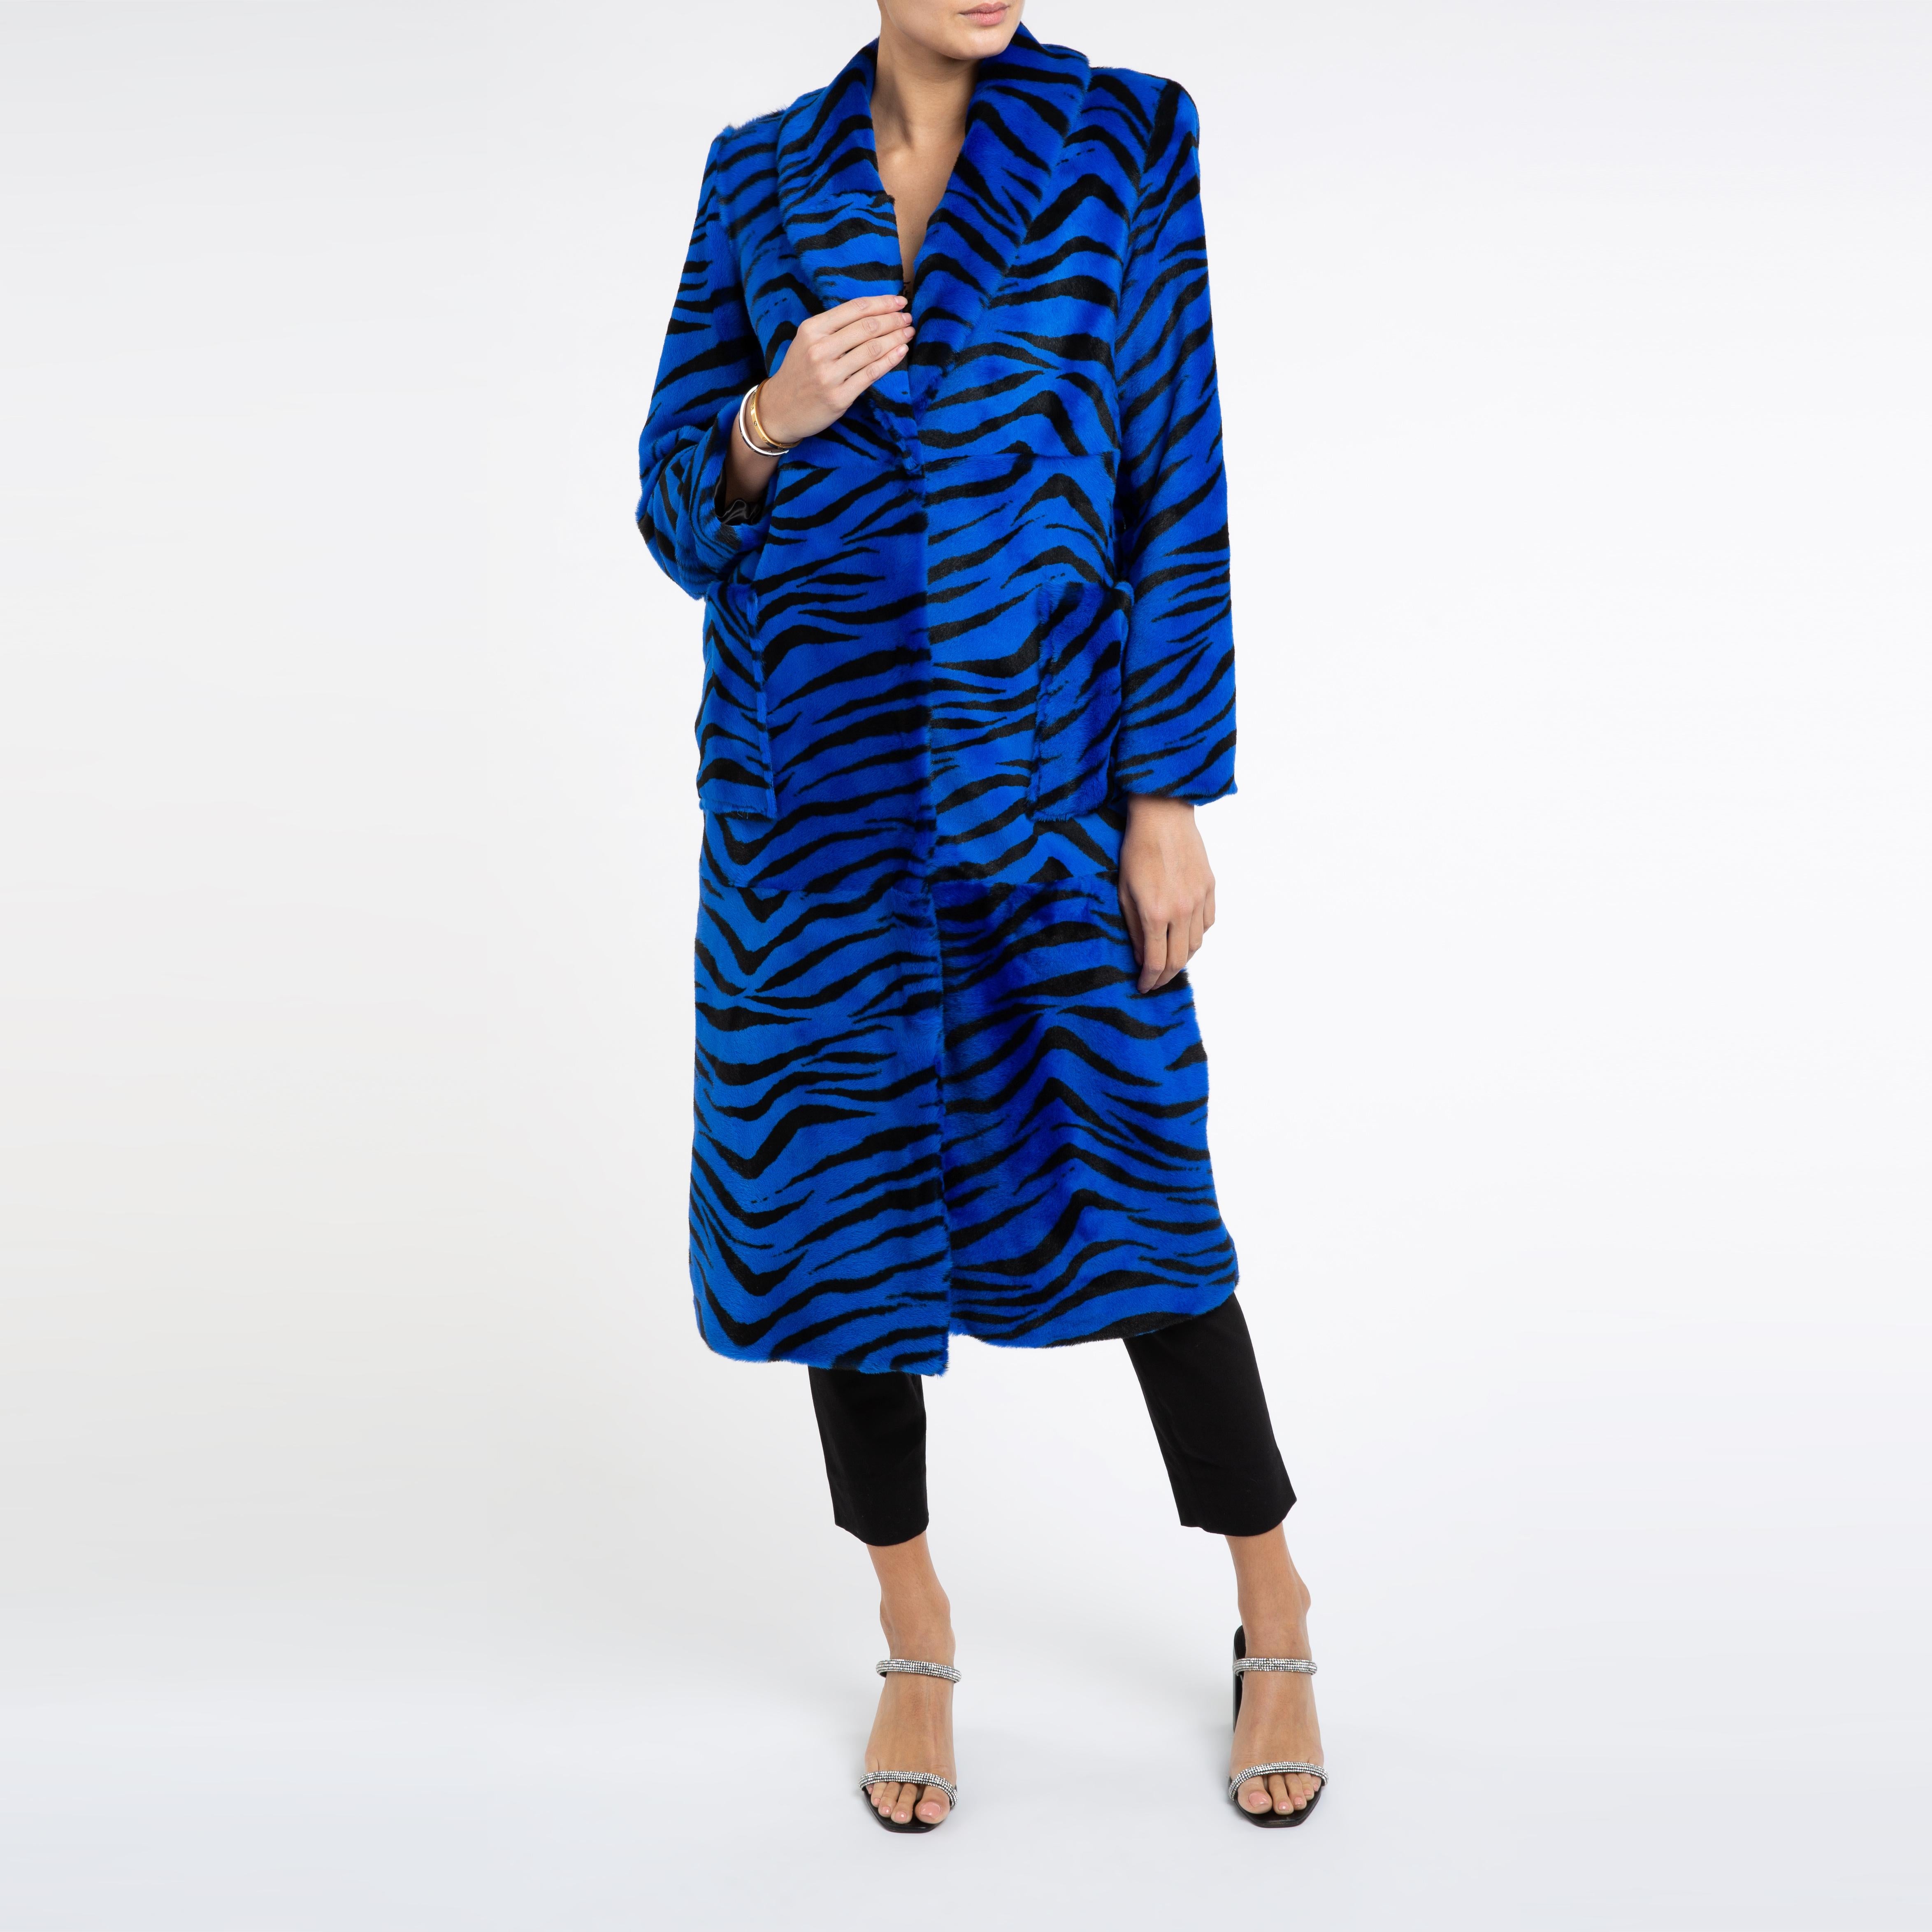 Verheyen London Shearling Coat in Blue Zebra Print size uk 8-10 For Sale 7